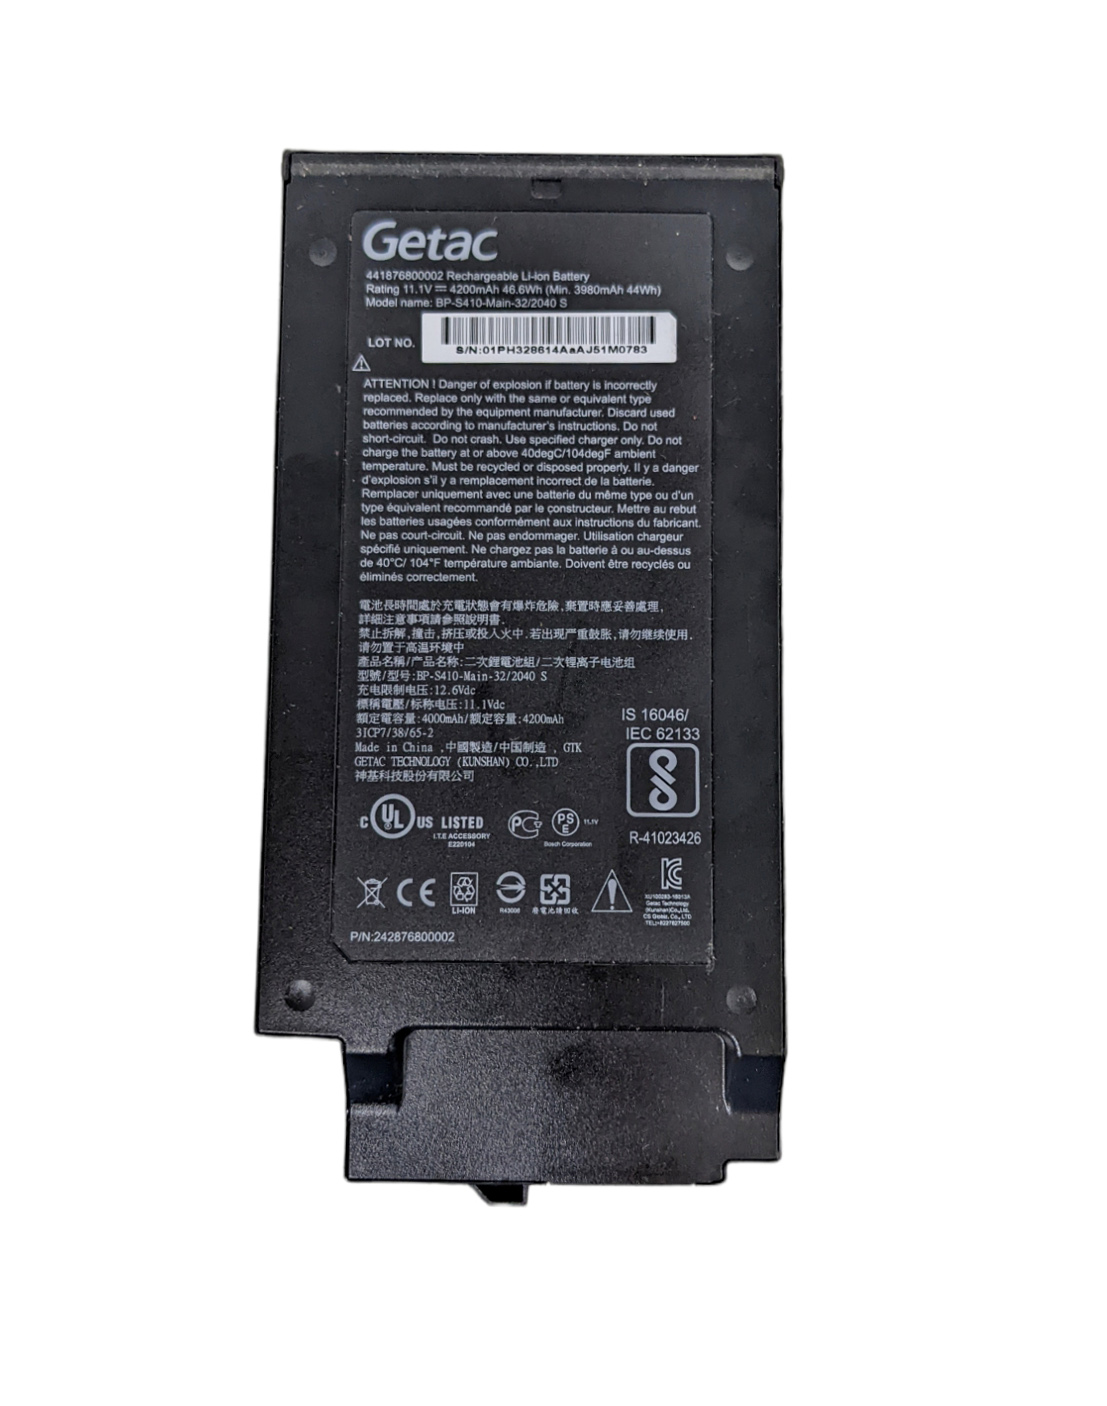 Battery Getac 242876800002 4200mAh 46.6Wh - Click Image to Close